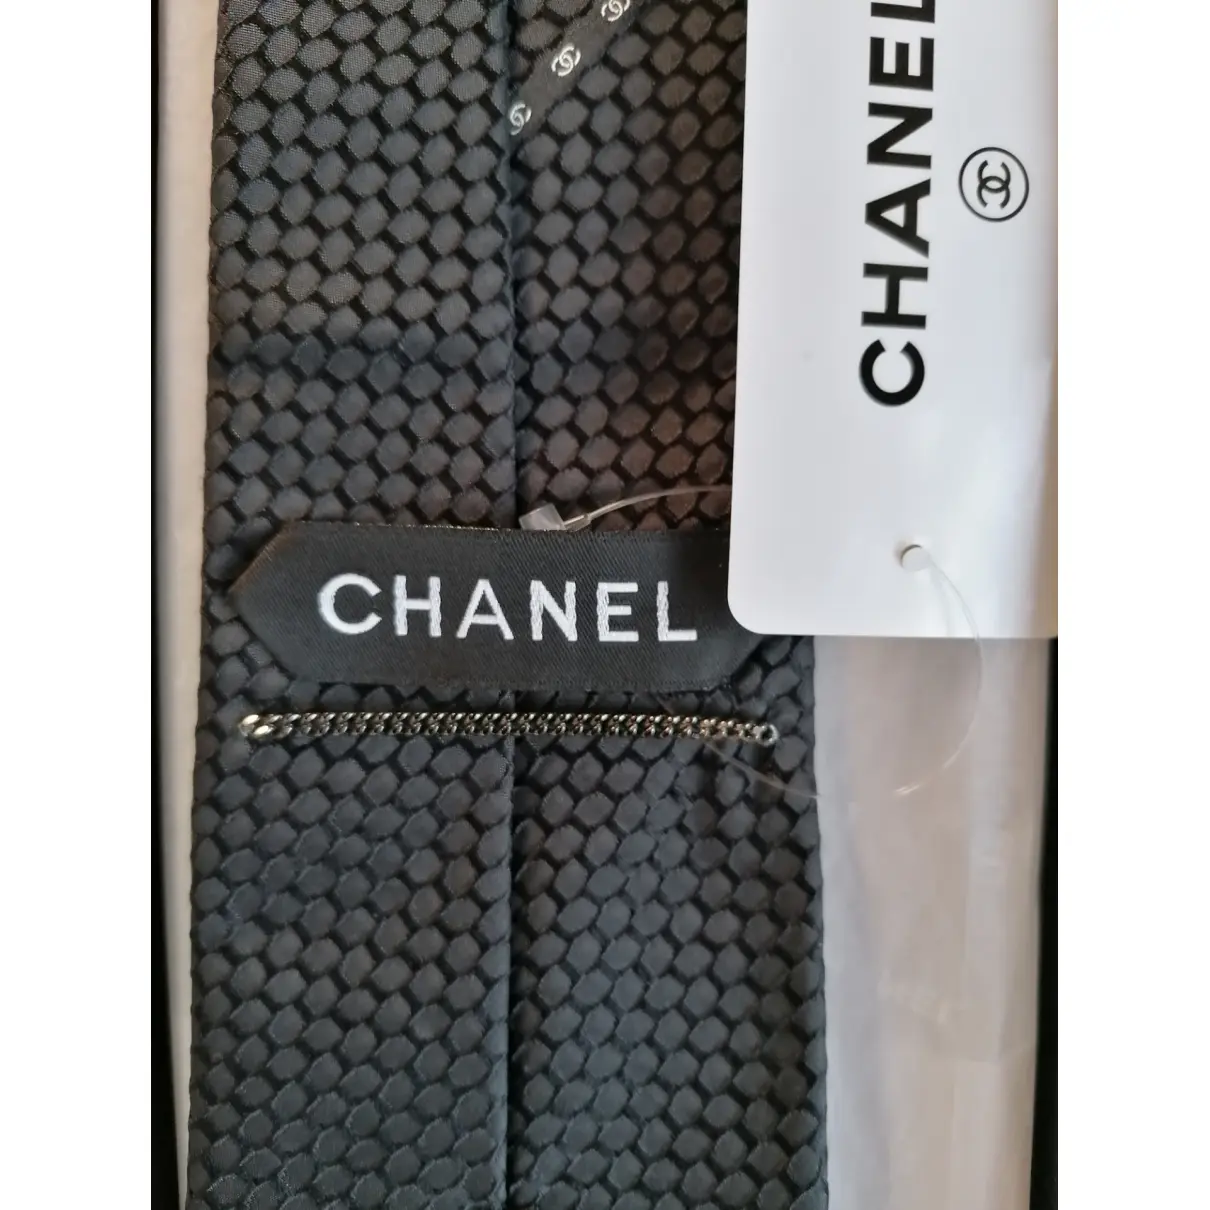 Buy Chanel Silk tie online - Vintage